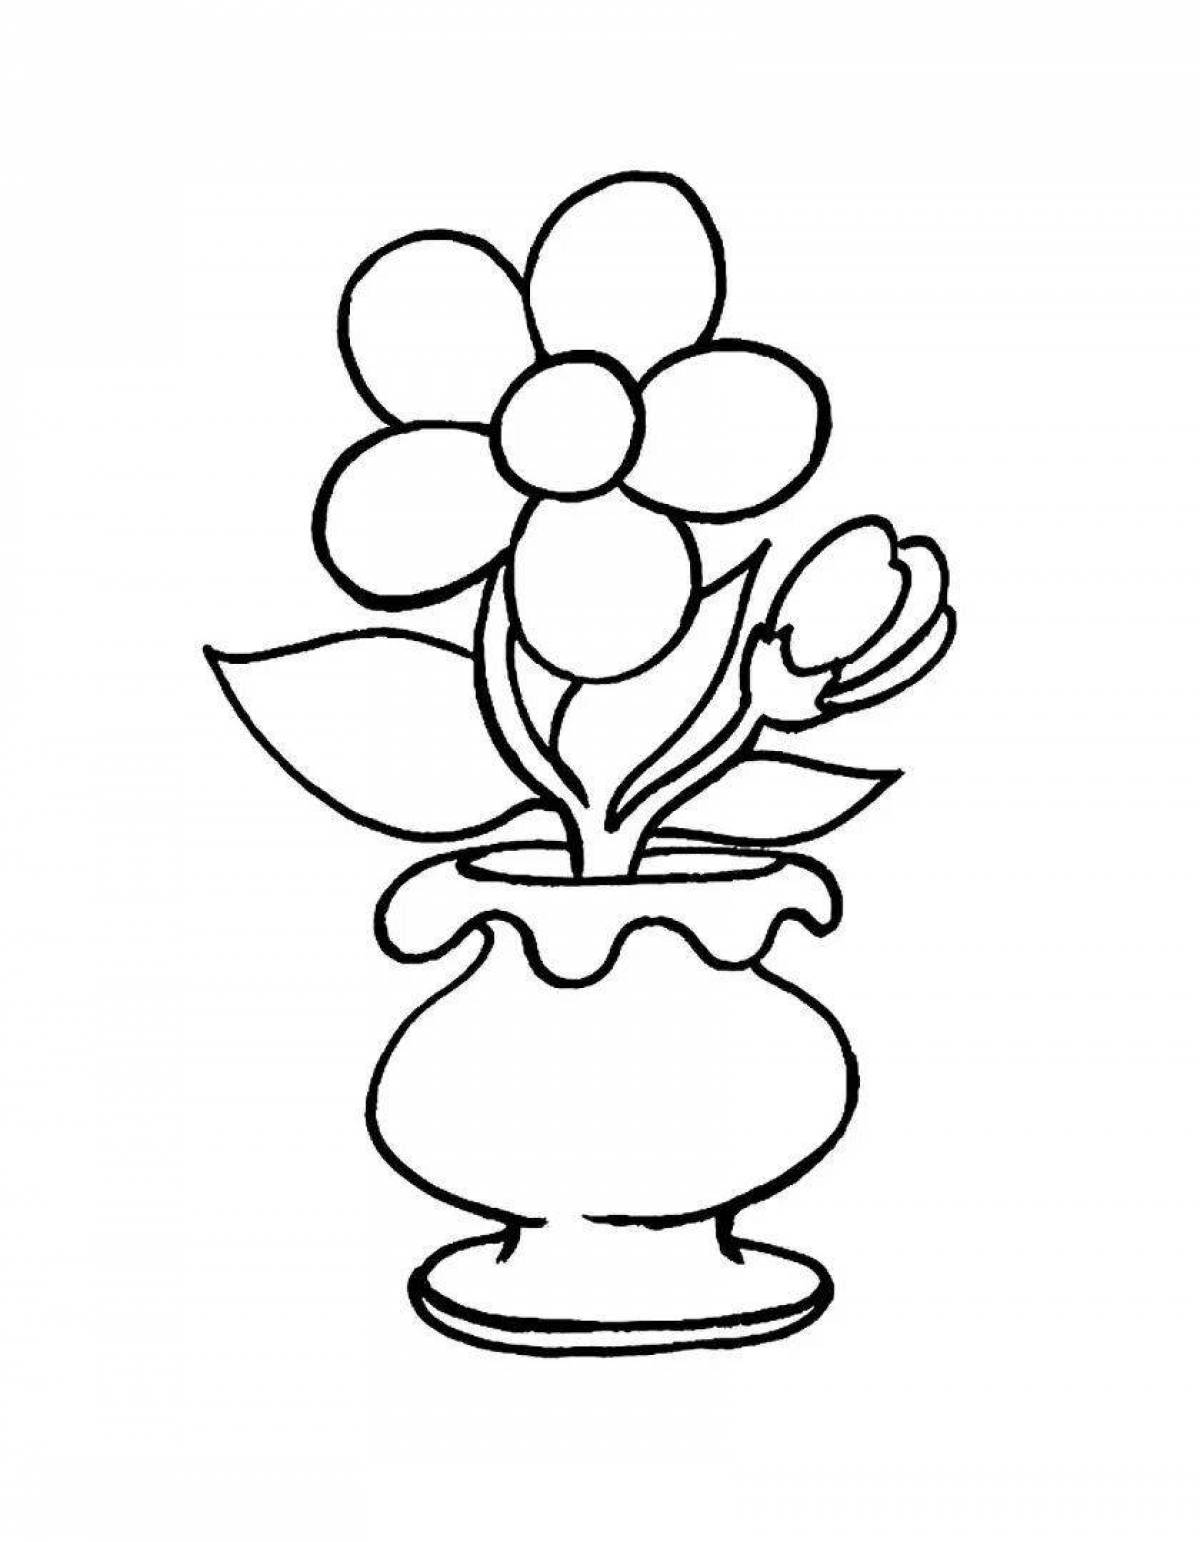 Adorable flower vase for 3-4 year olds